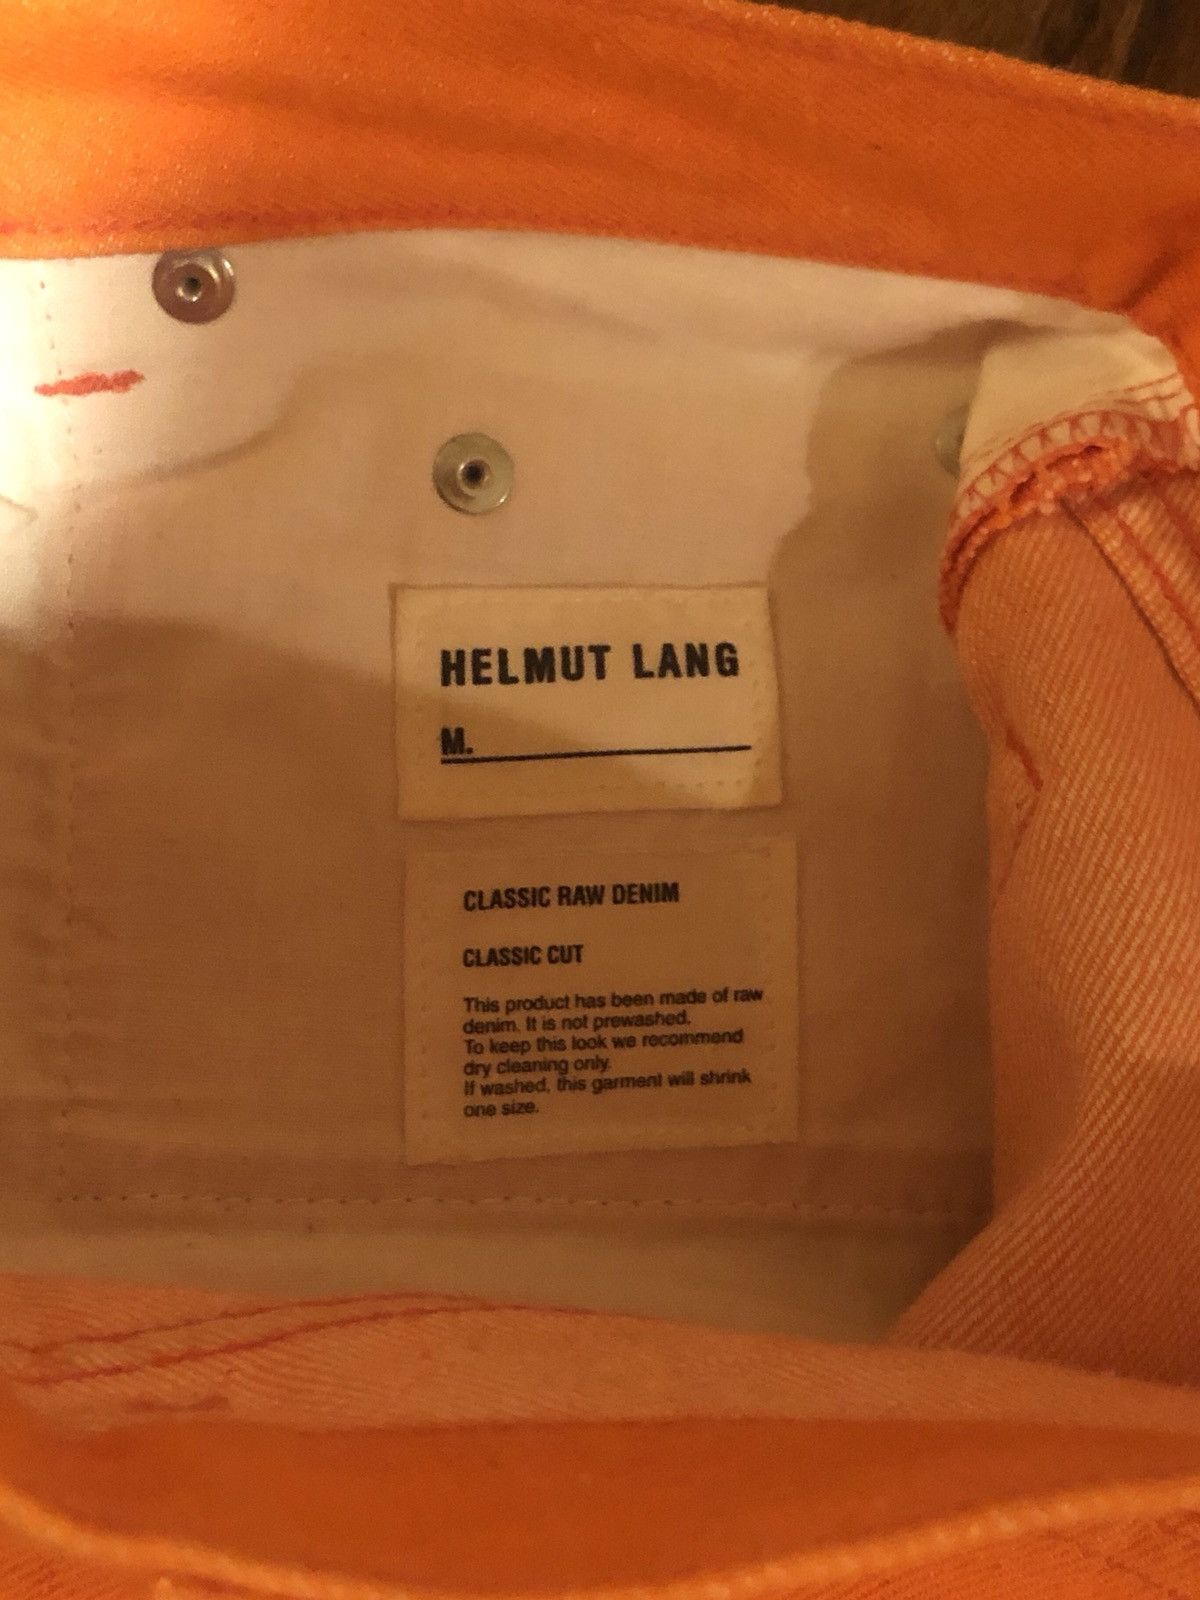 Helmut Lang Helmut Lang Safety Orange Raw Denim Jeans Size US 28 / EU 44 - 3 Thumbnail